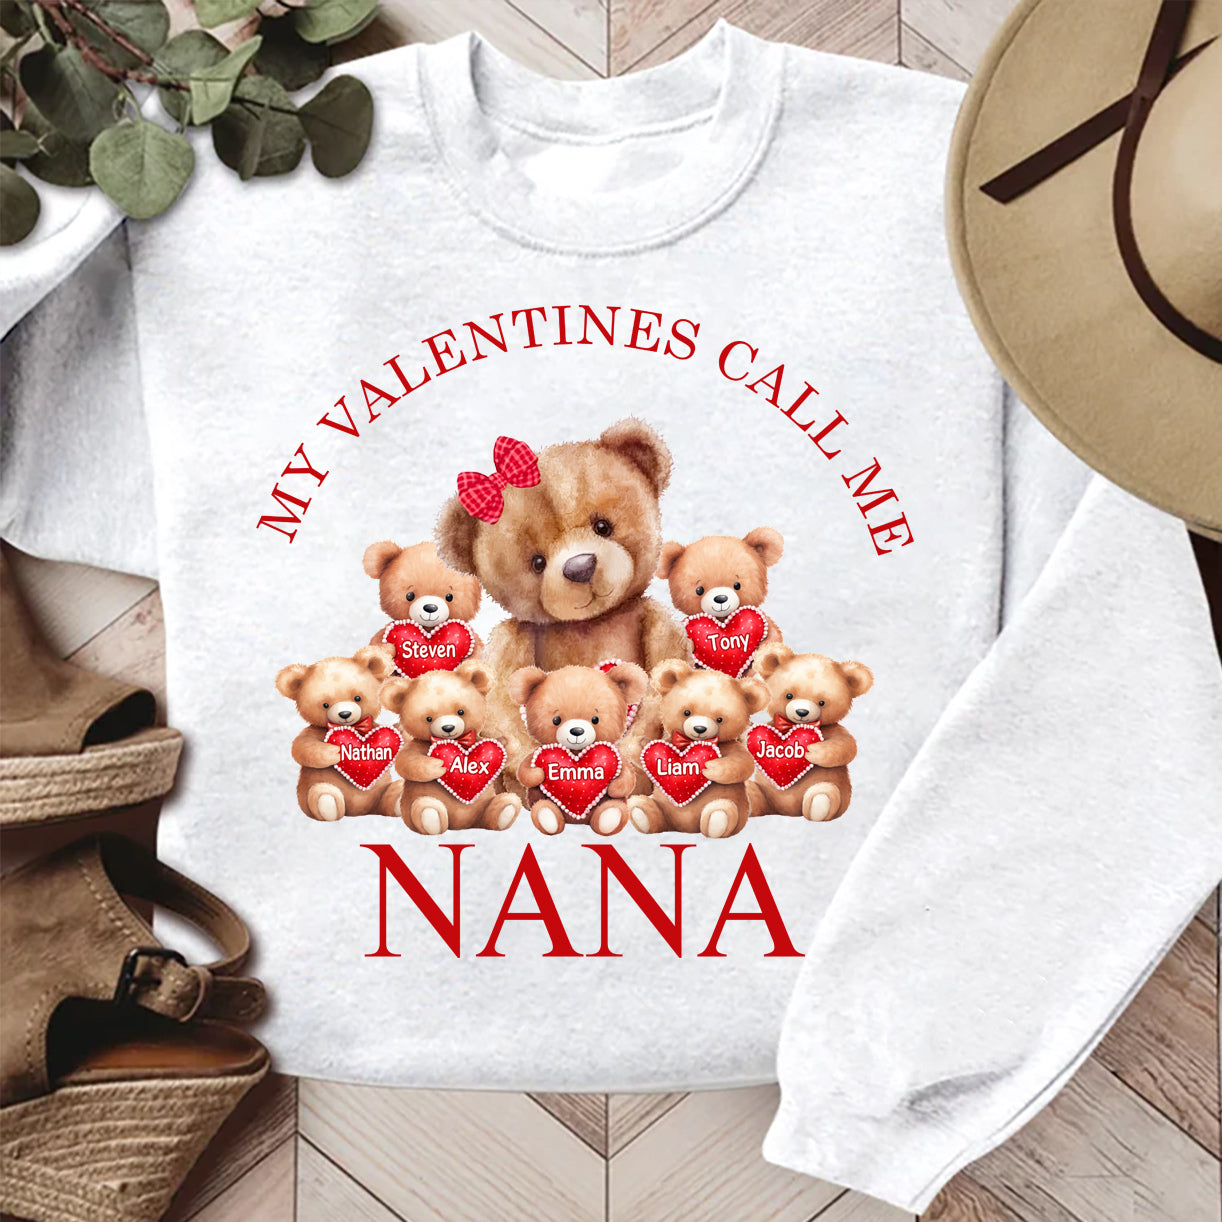 My Valentines Call me Grandma Personalized Grandma Bear Sweatshirt VTX12JAN24CT1